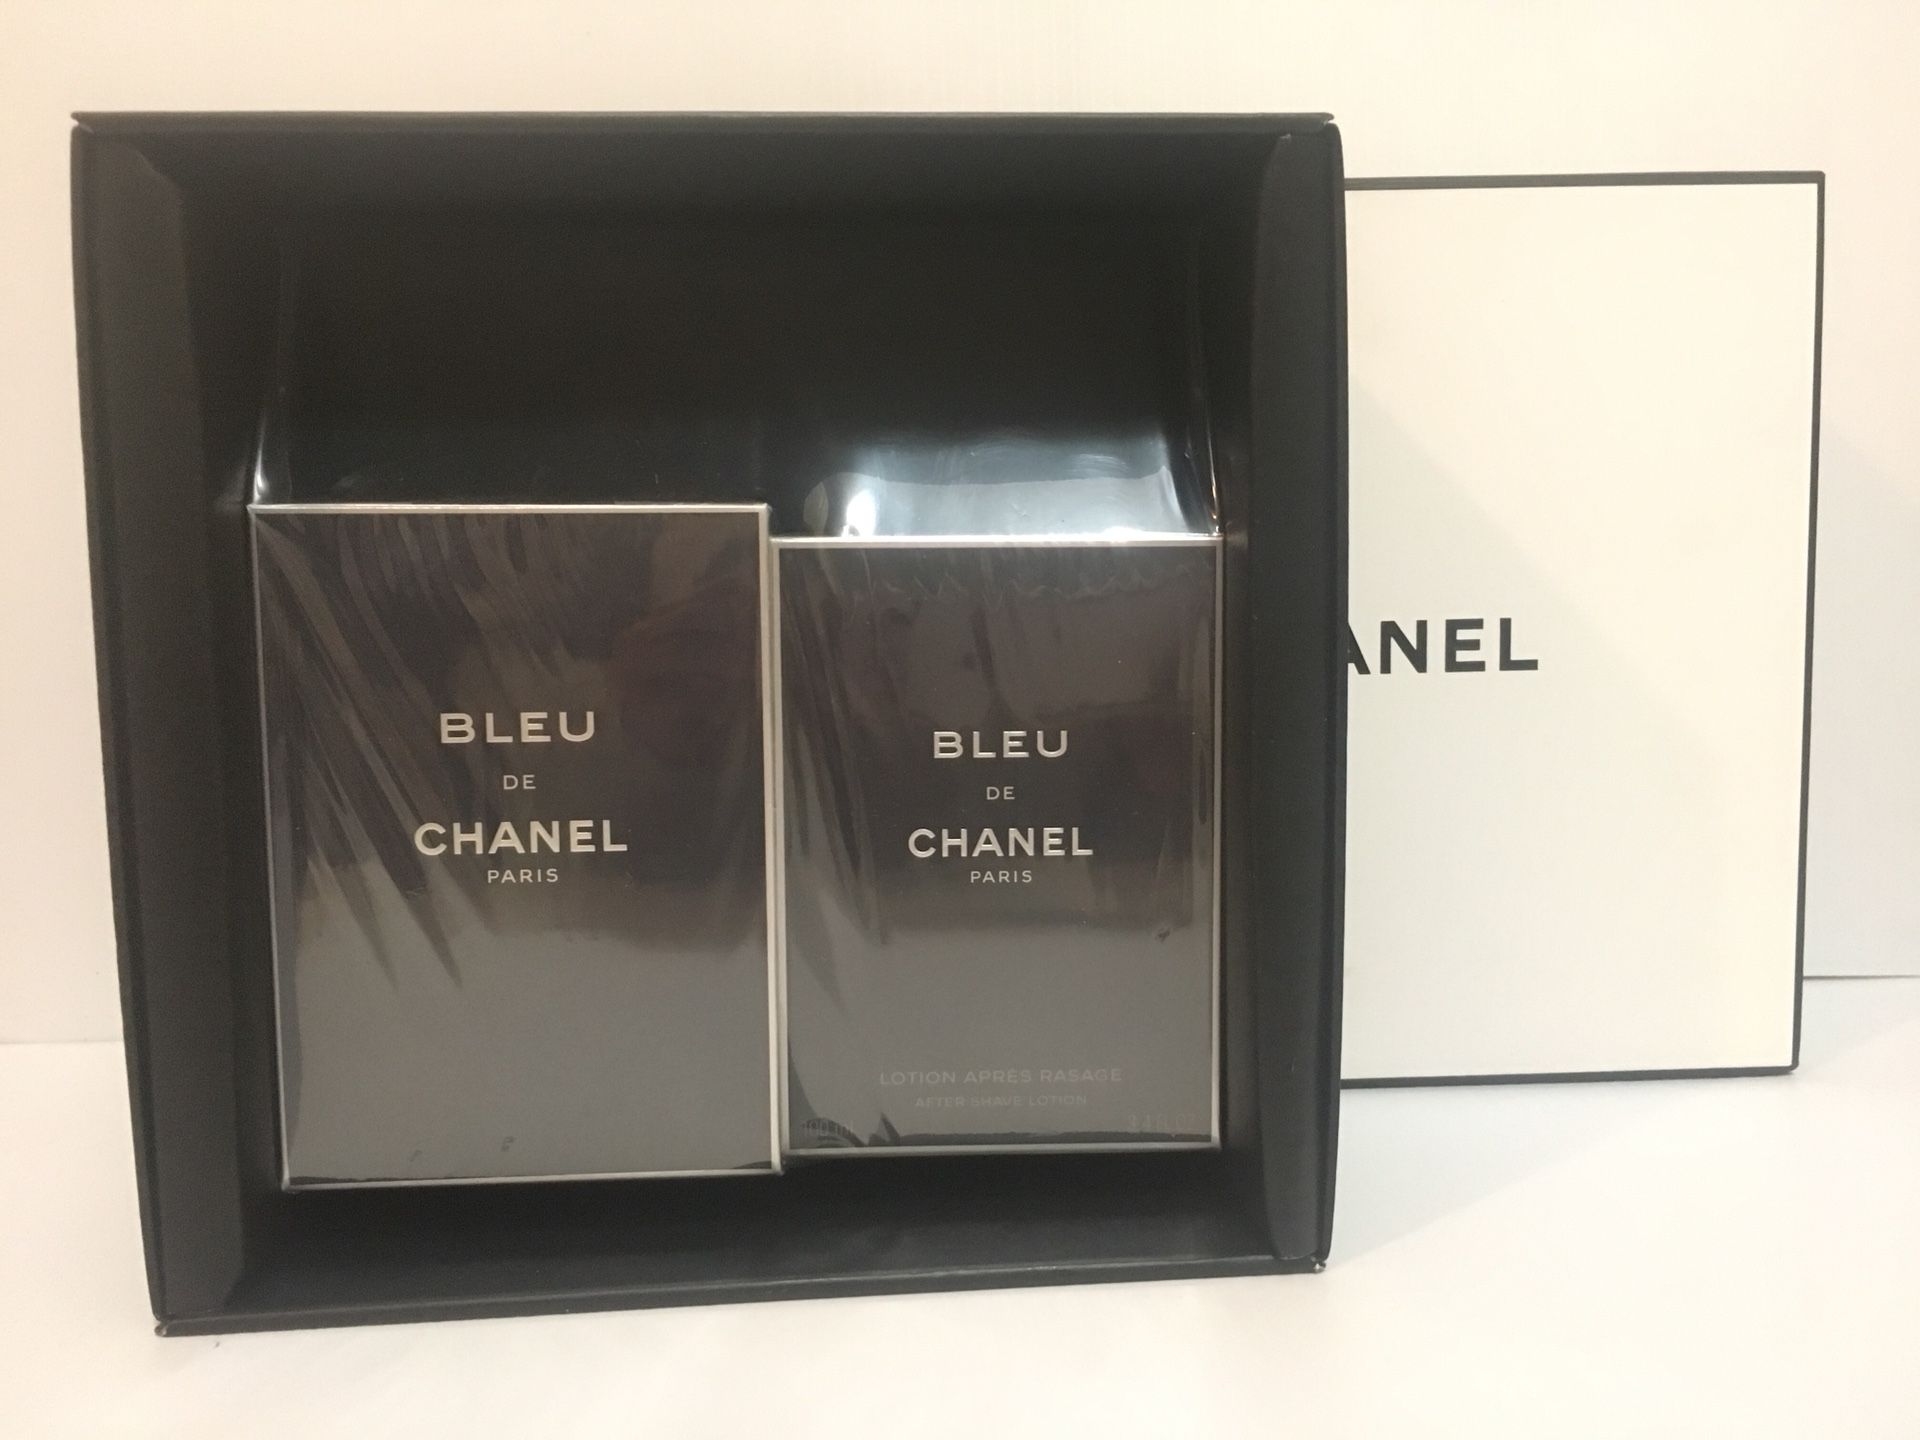 BLEU DE CHANEL 2 Pcs Gift Set PARFUM 3.4oz